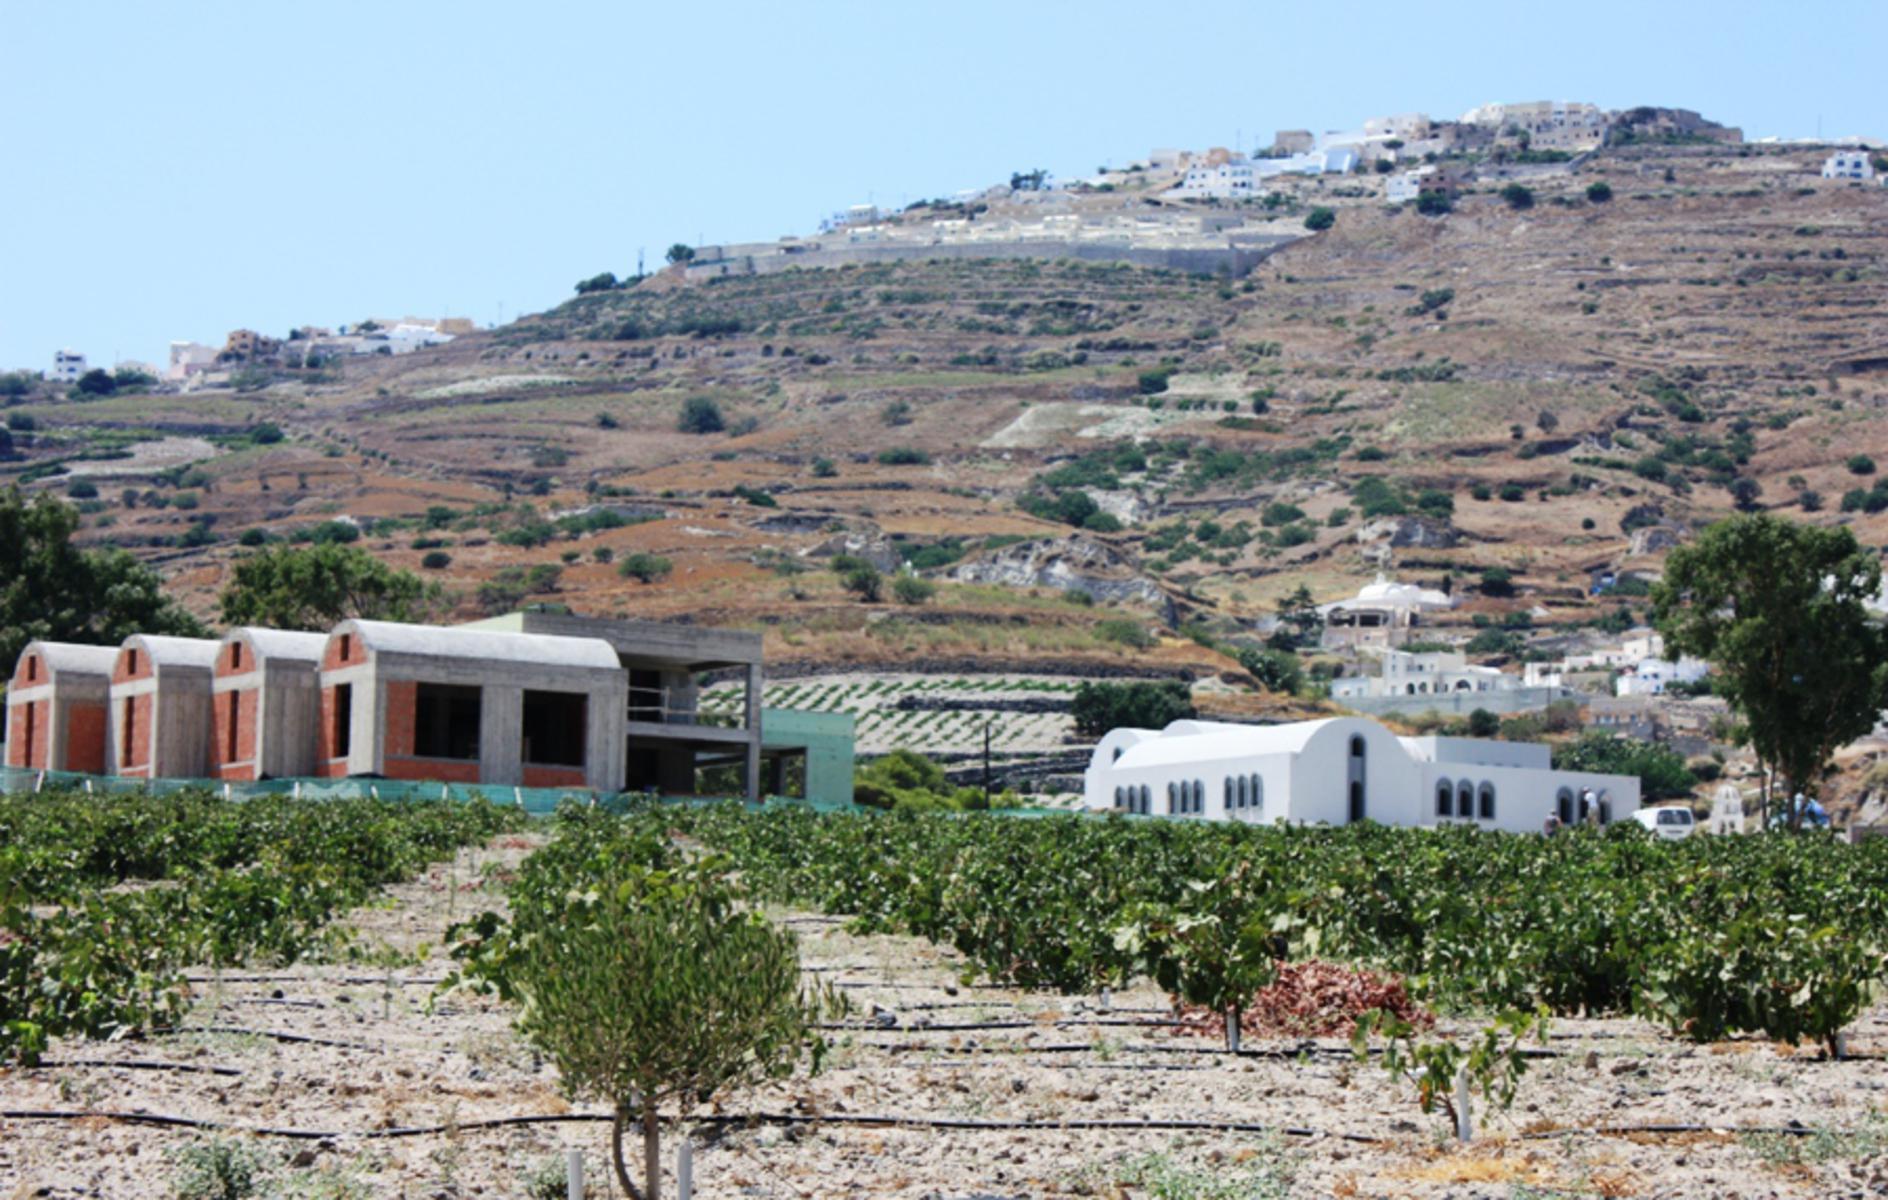 Argyros Estate - Winery in Santorini